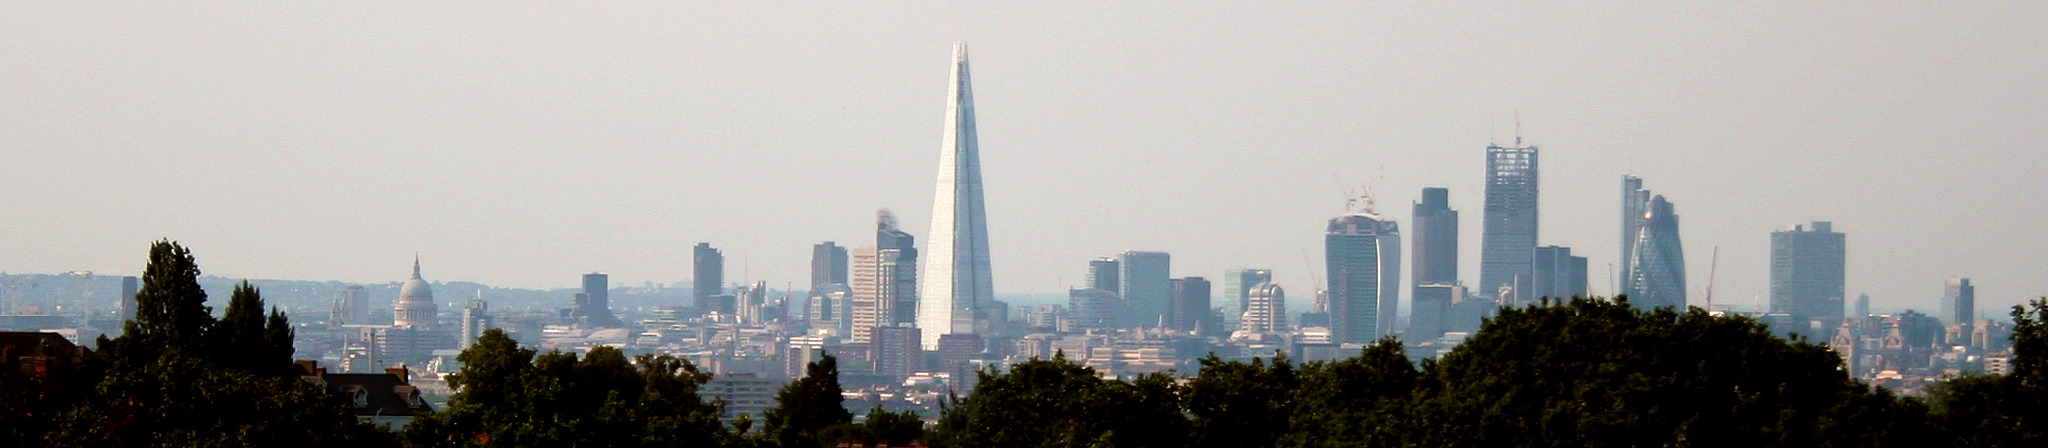 Die Londoner Skyline (Bild: Cmglee)